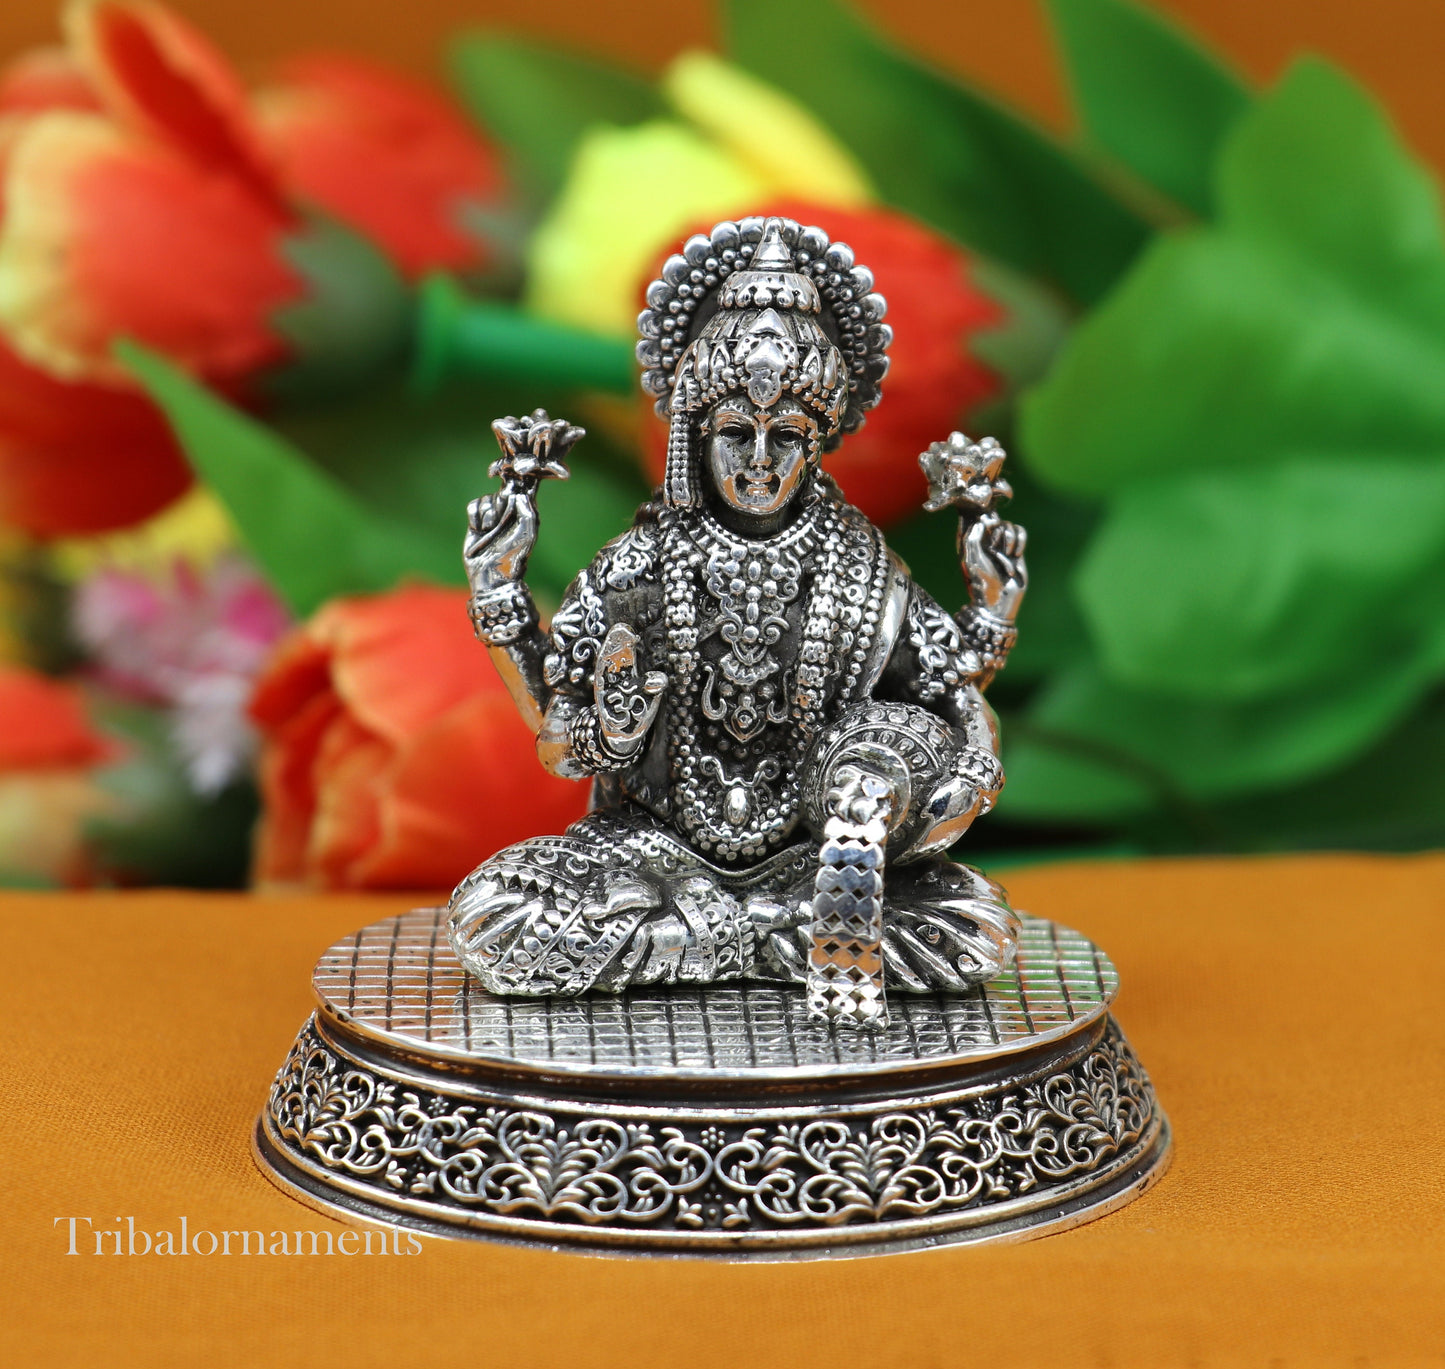 Pure 925 Sterling silver handmade  Hindu Goddess Laxmi statue, puja article figurine, home décor Diwali puja articles gifting art220 - TRIBAL ORNAMENTS